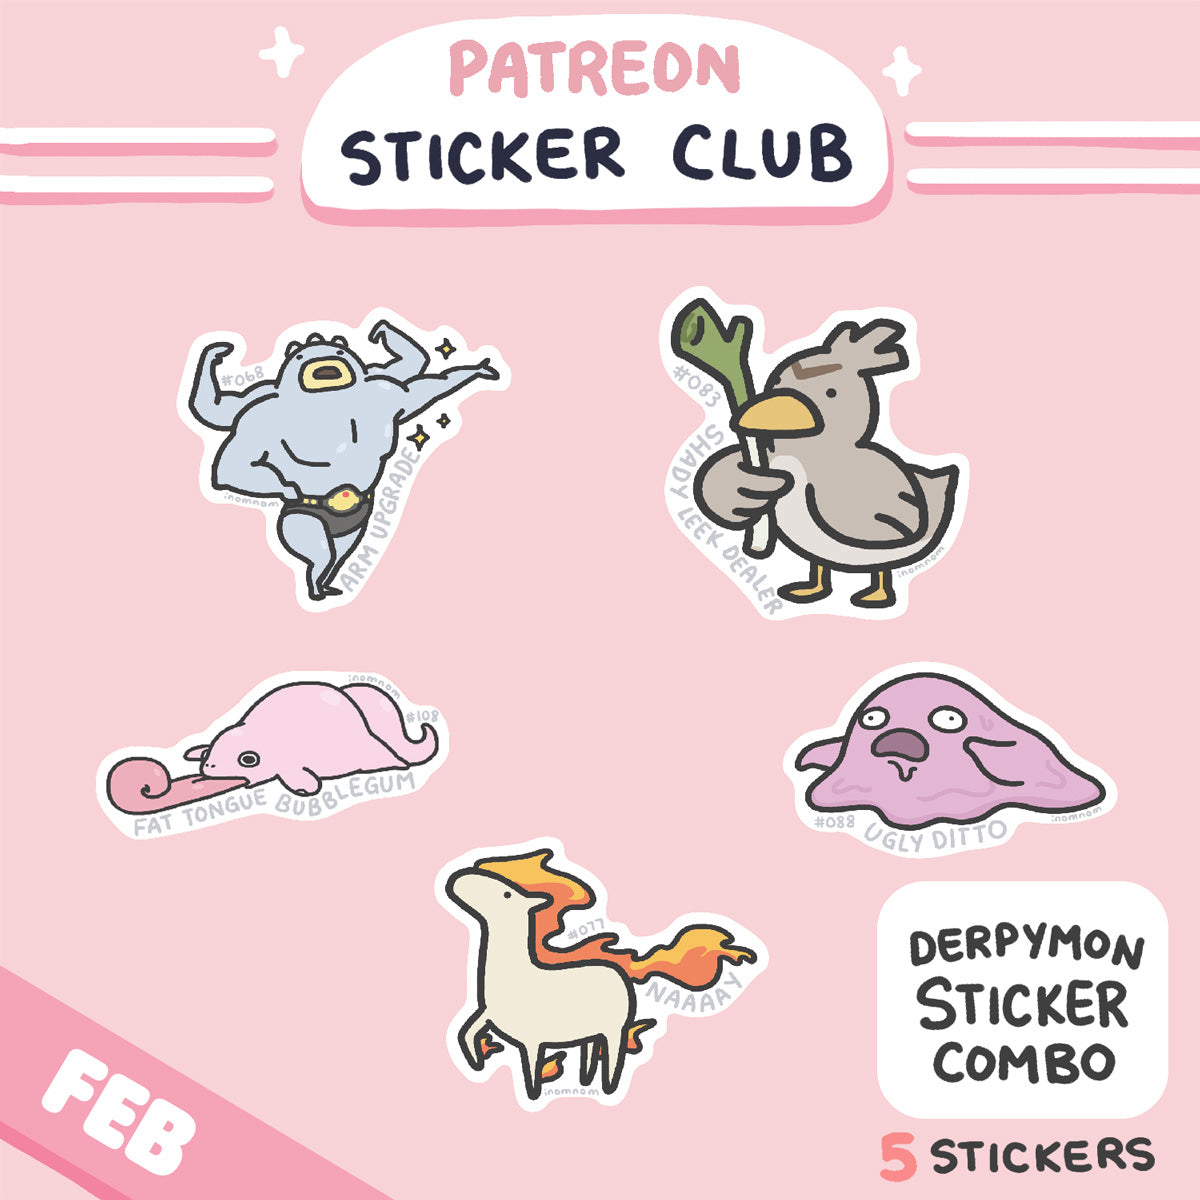 February Derpymon Sticker Rewards